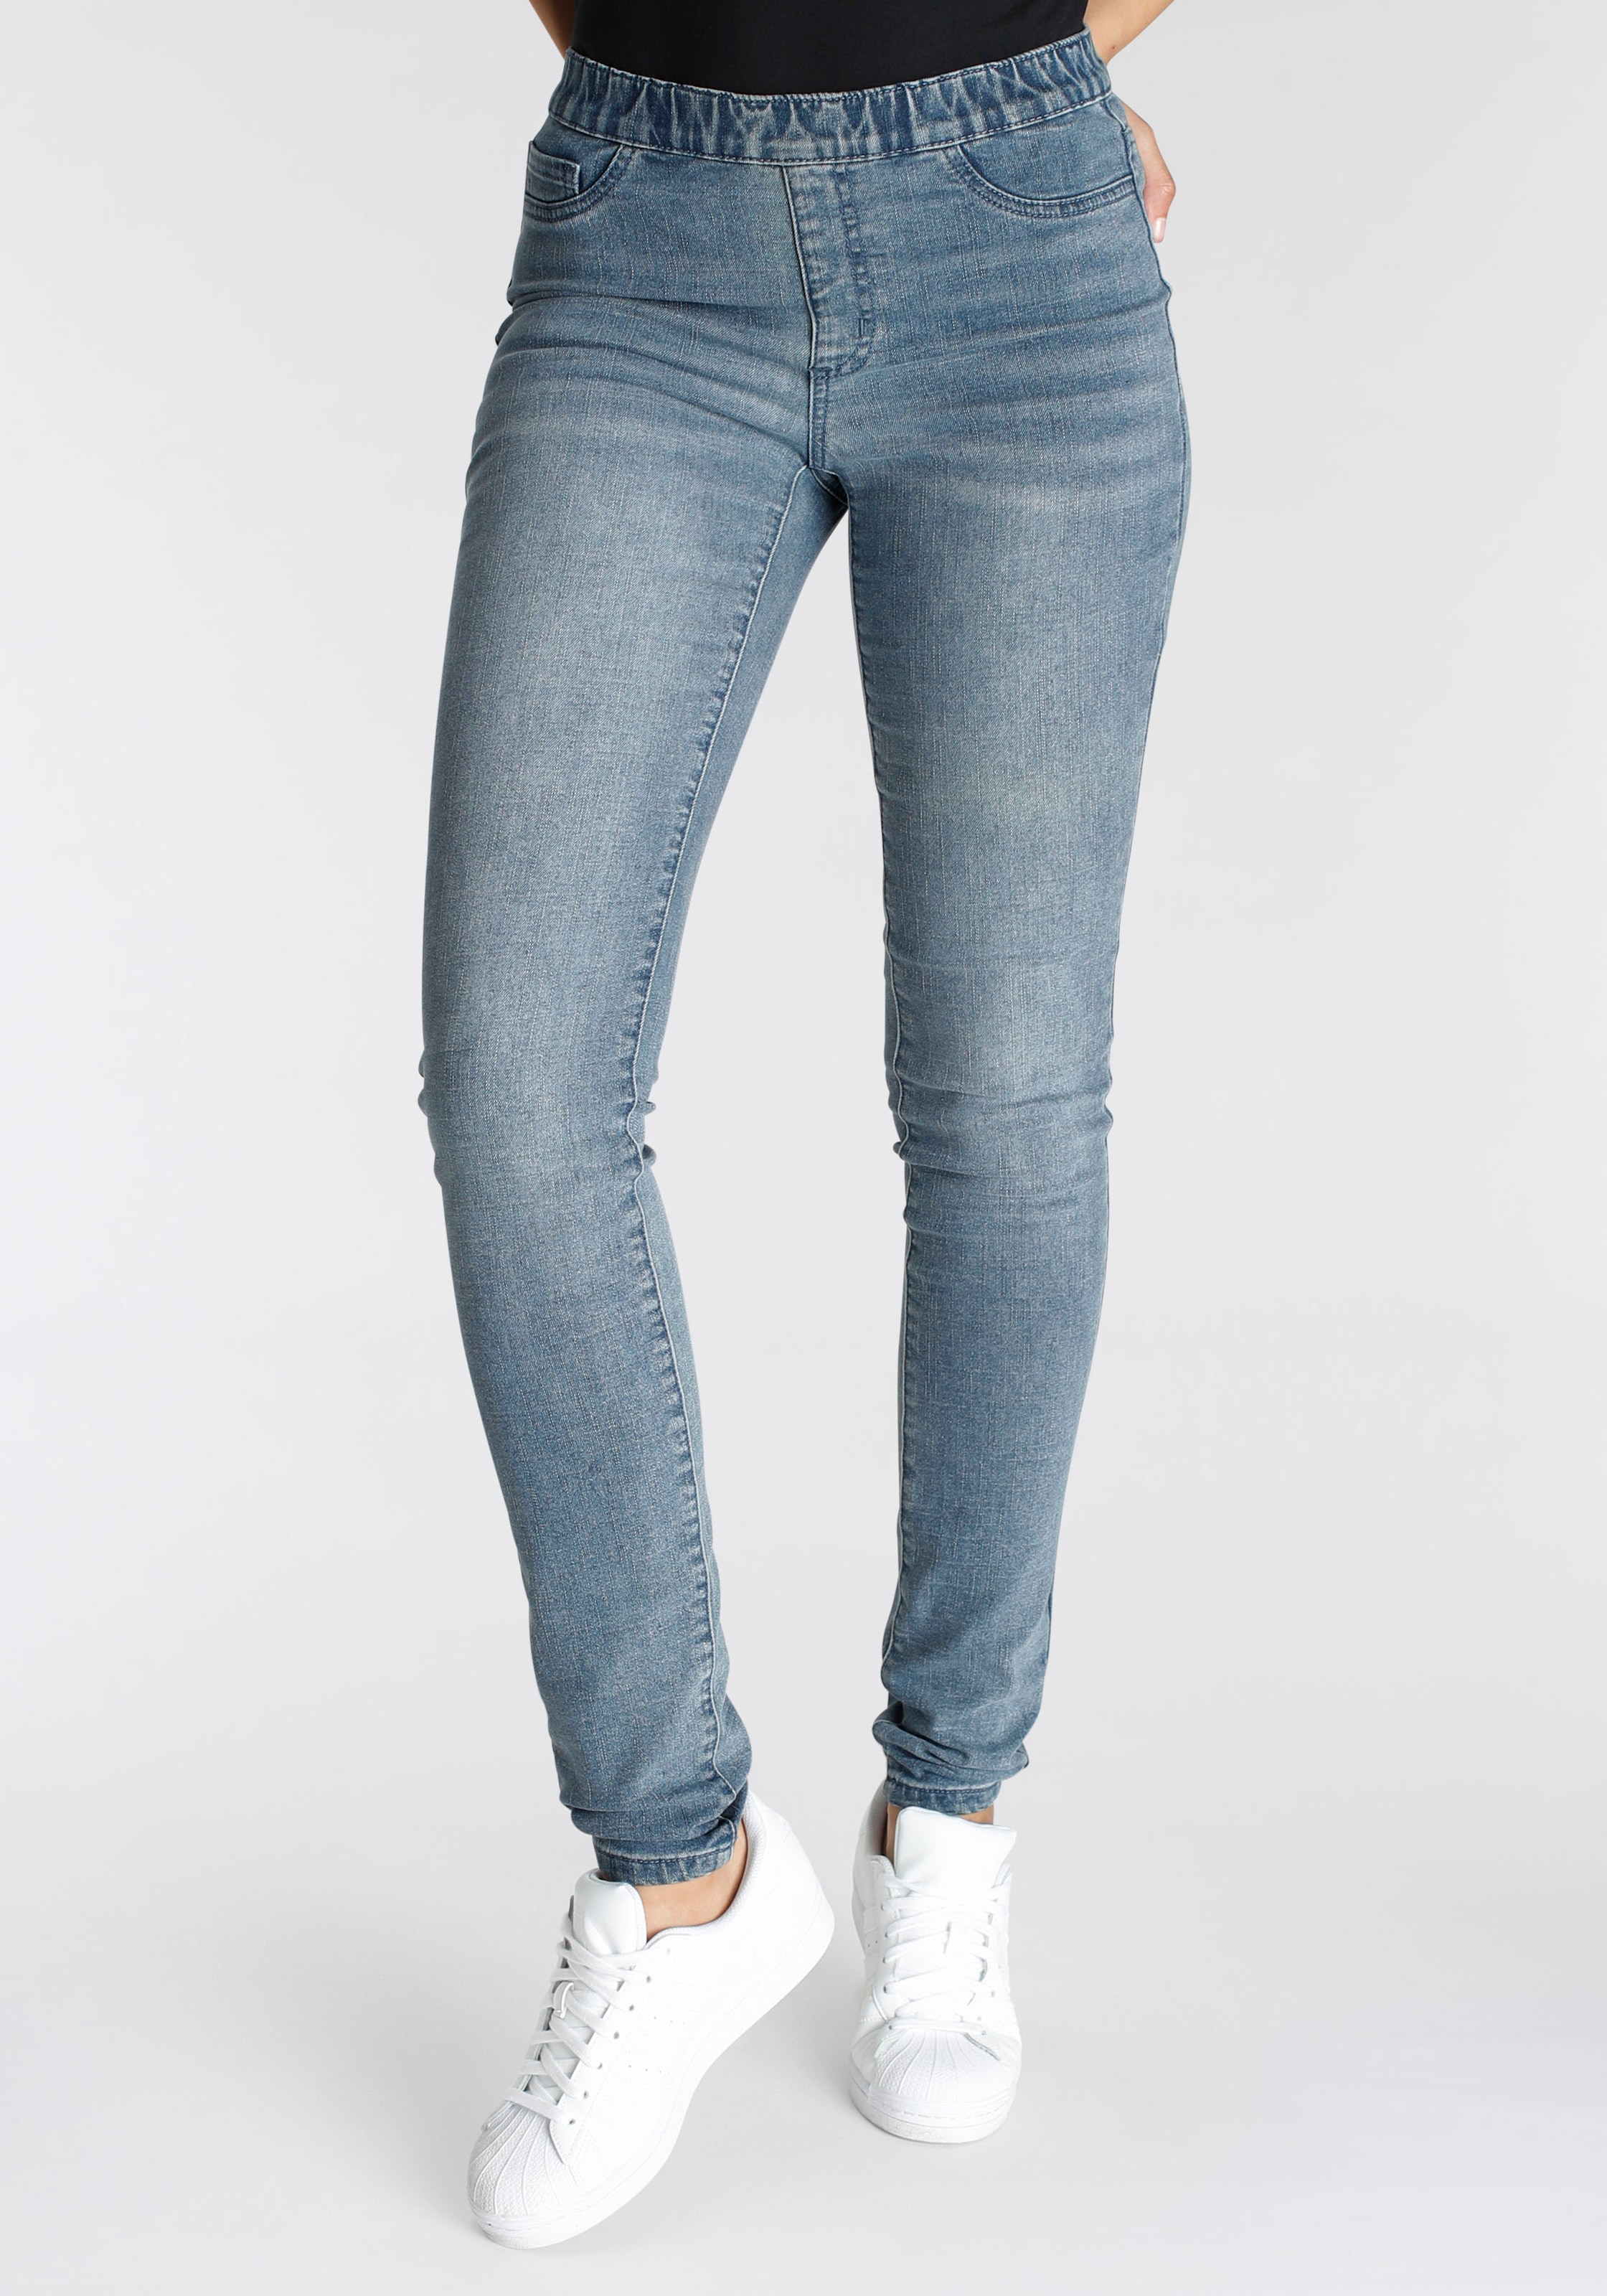 Arizona bestellen Damen Jeans online ▻